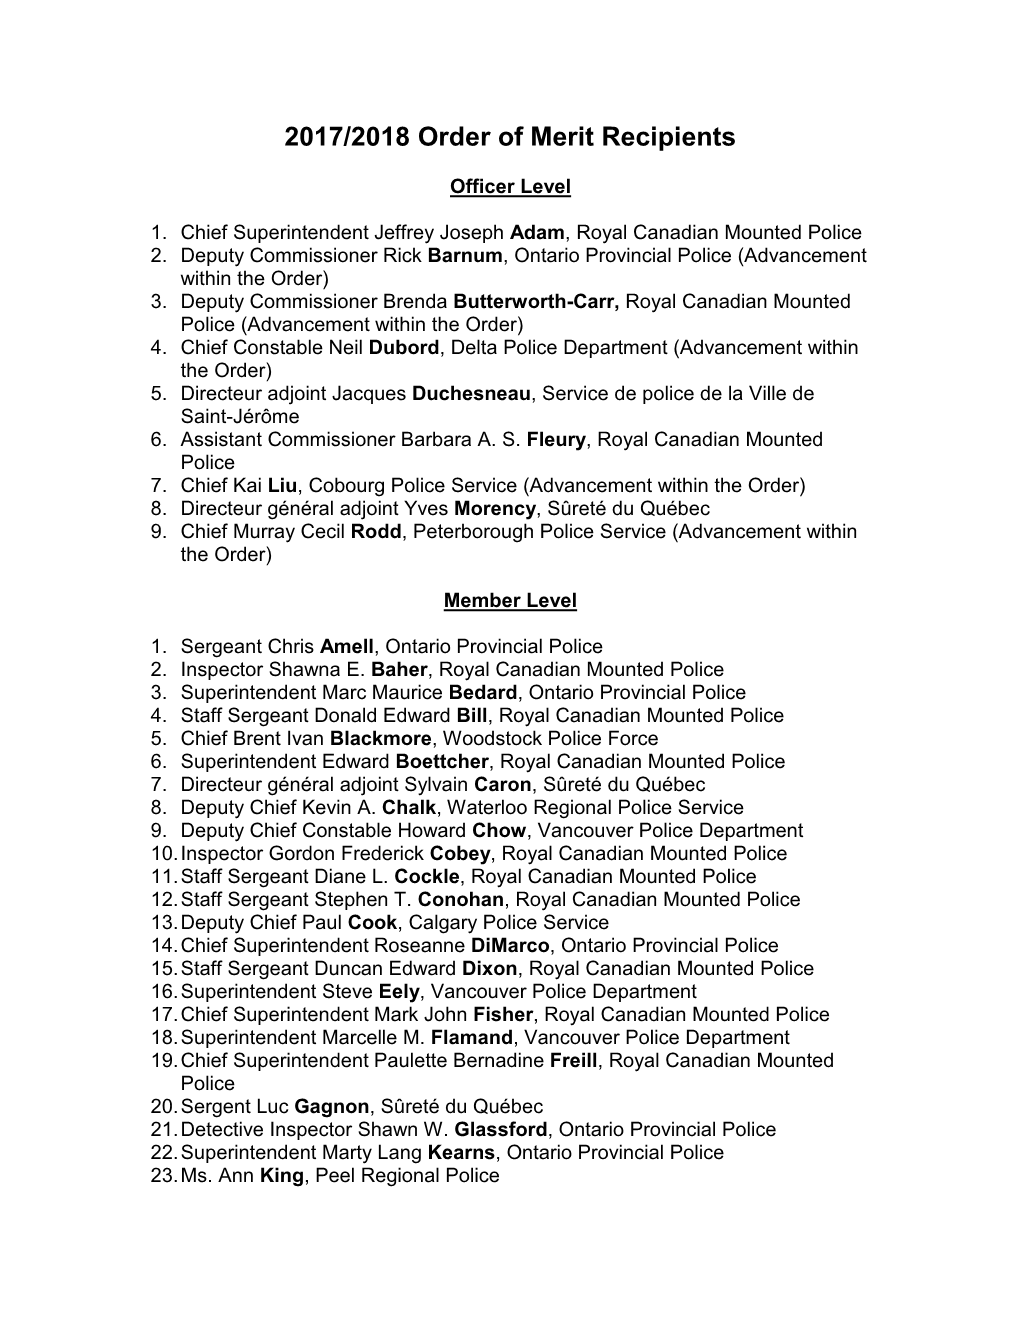 Order of Merit List of Recipients 2017-2018